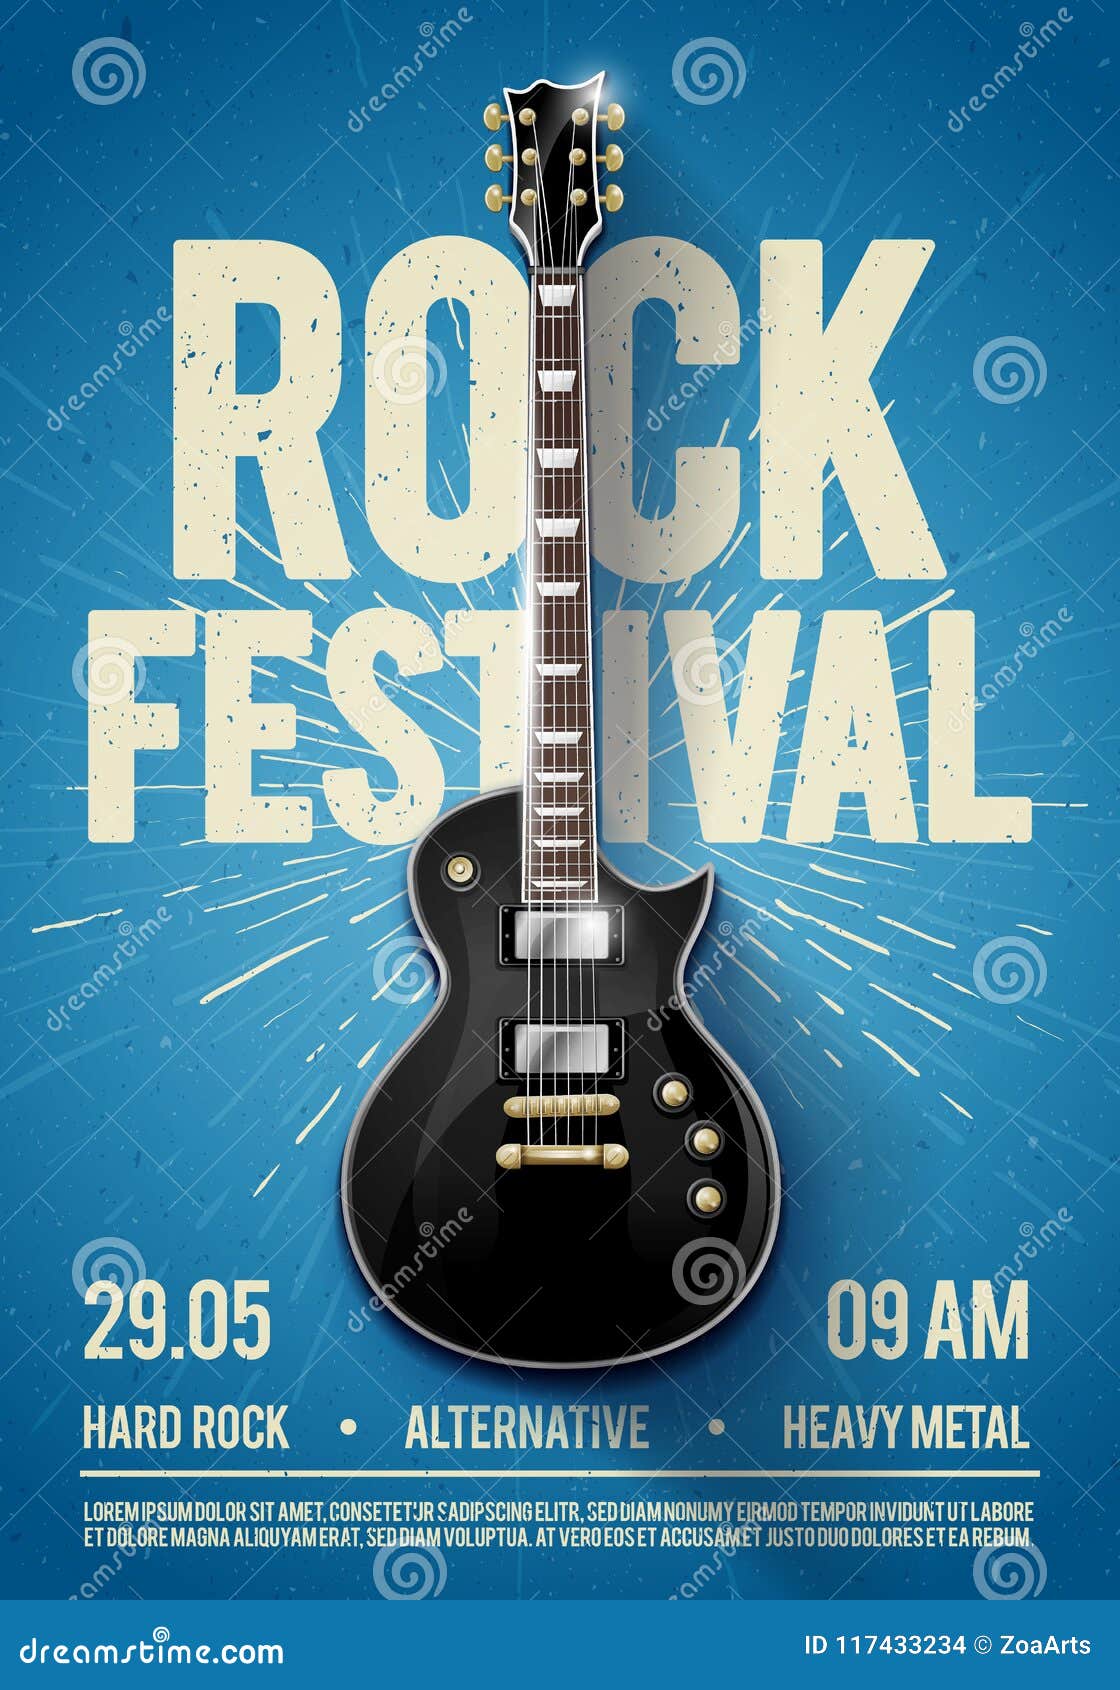 30 Most Hardcore Rock Illustration Posters  Rock poster design, Music  poster design, Music festival poster